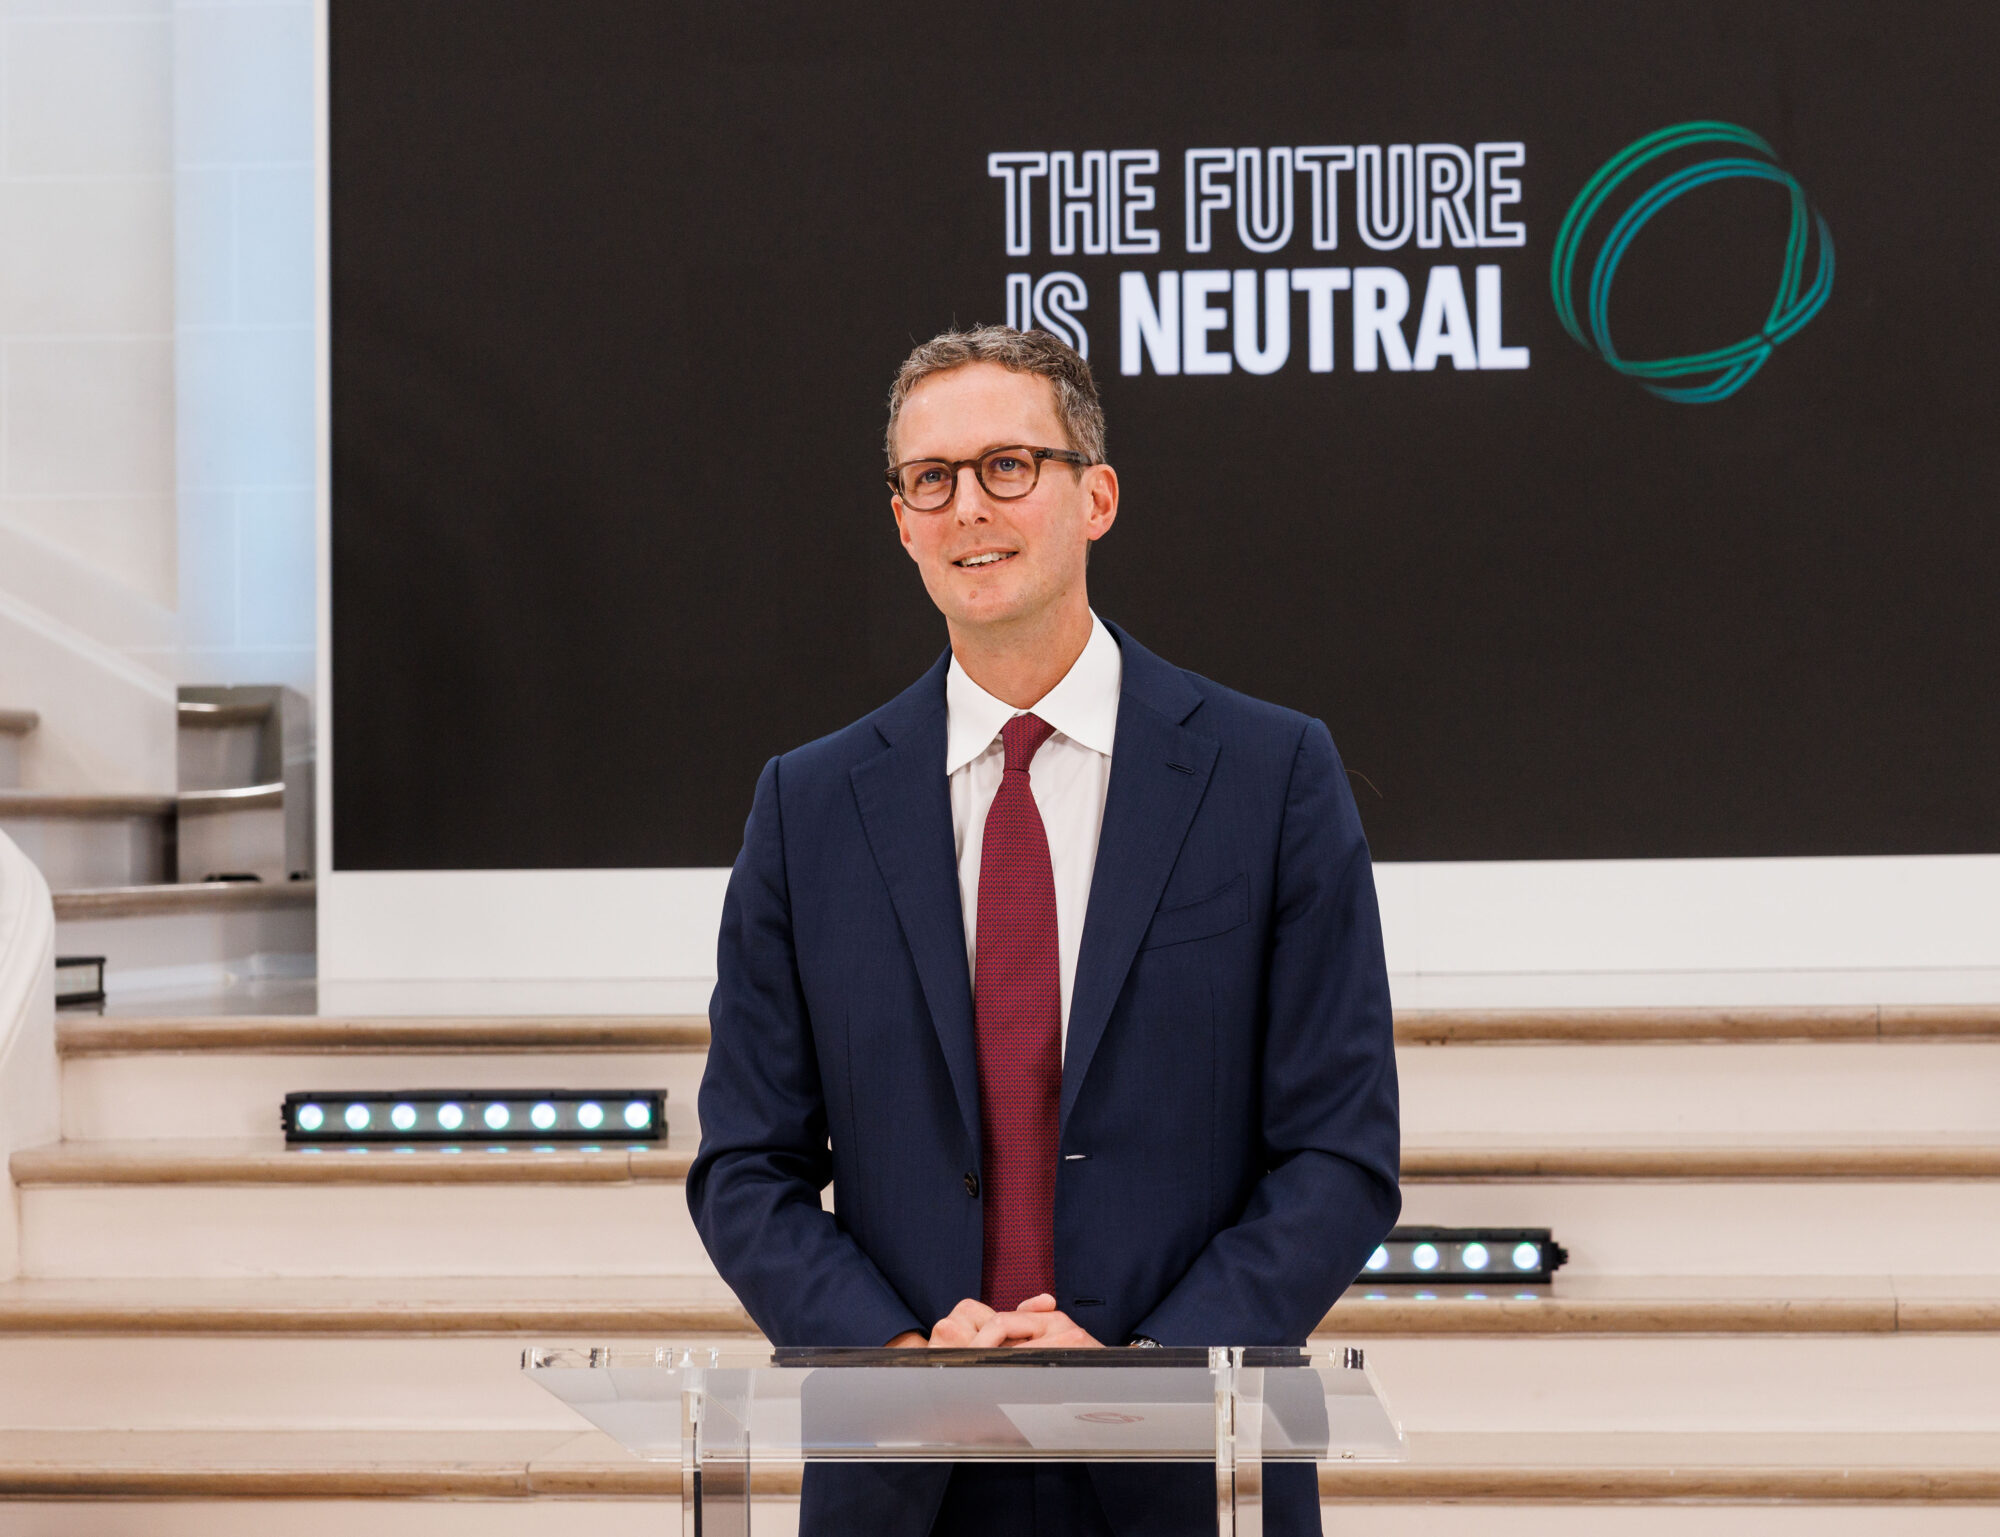 Jean-Philippe Bahuaud, CEO de The Future Is NEUTRAL